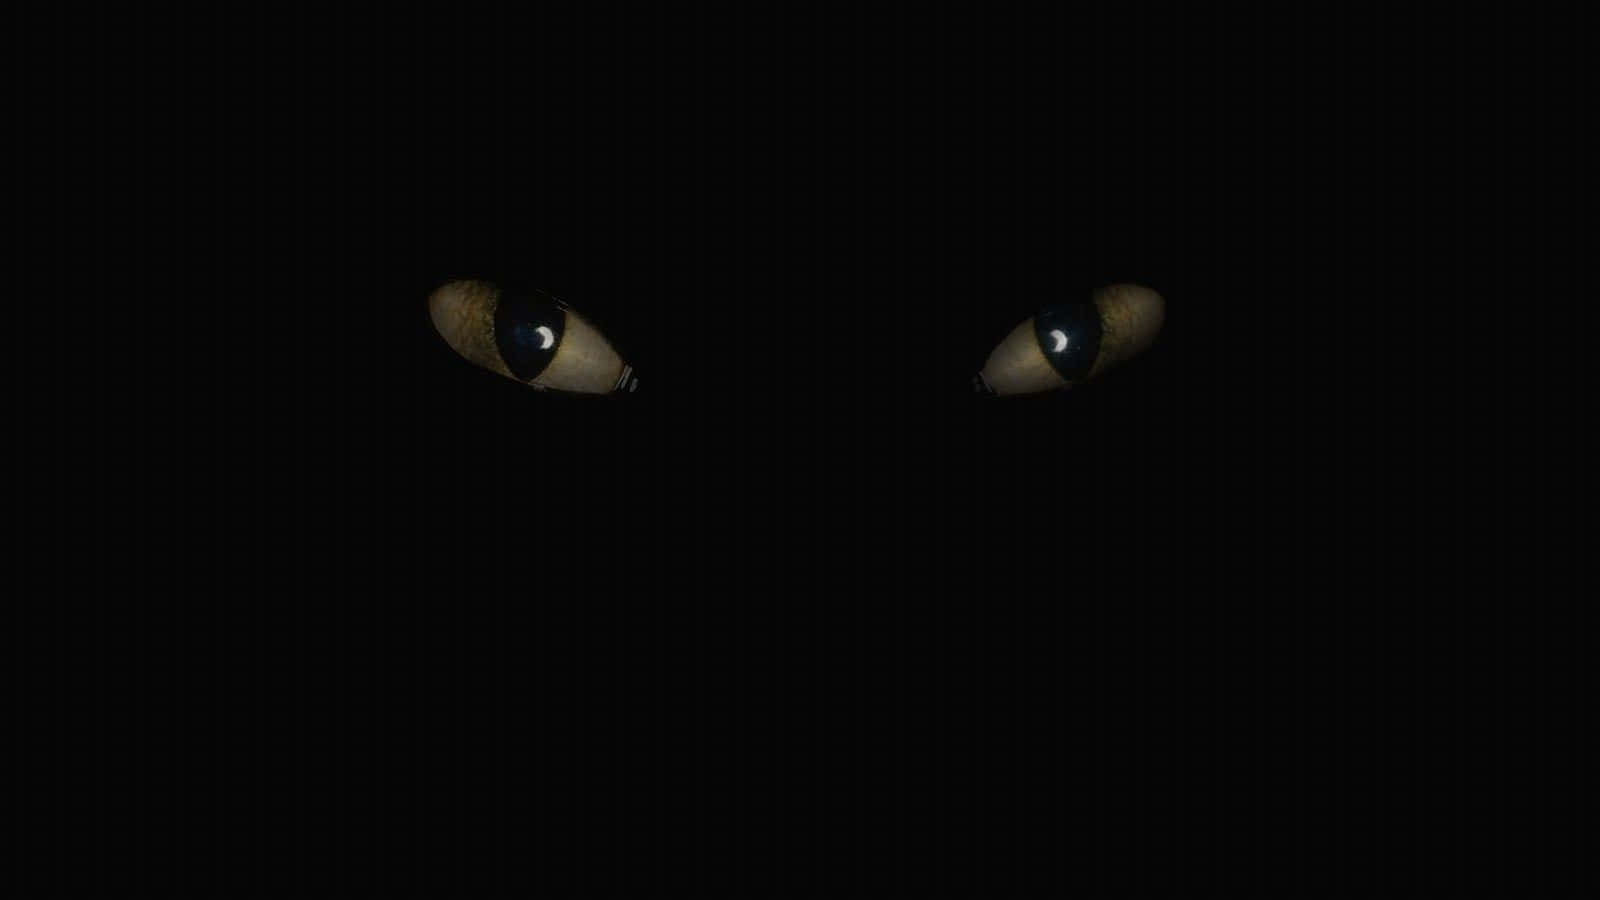 a black cat's eyes in the dark